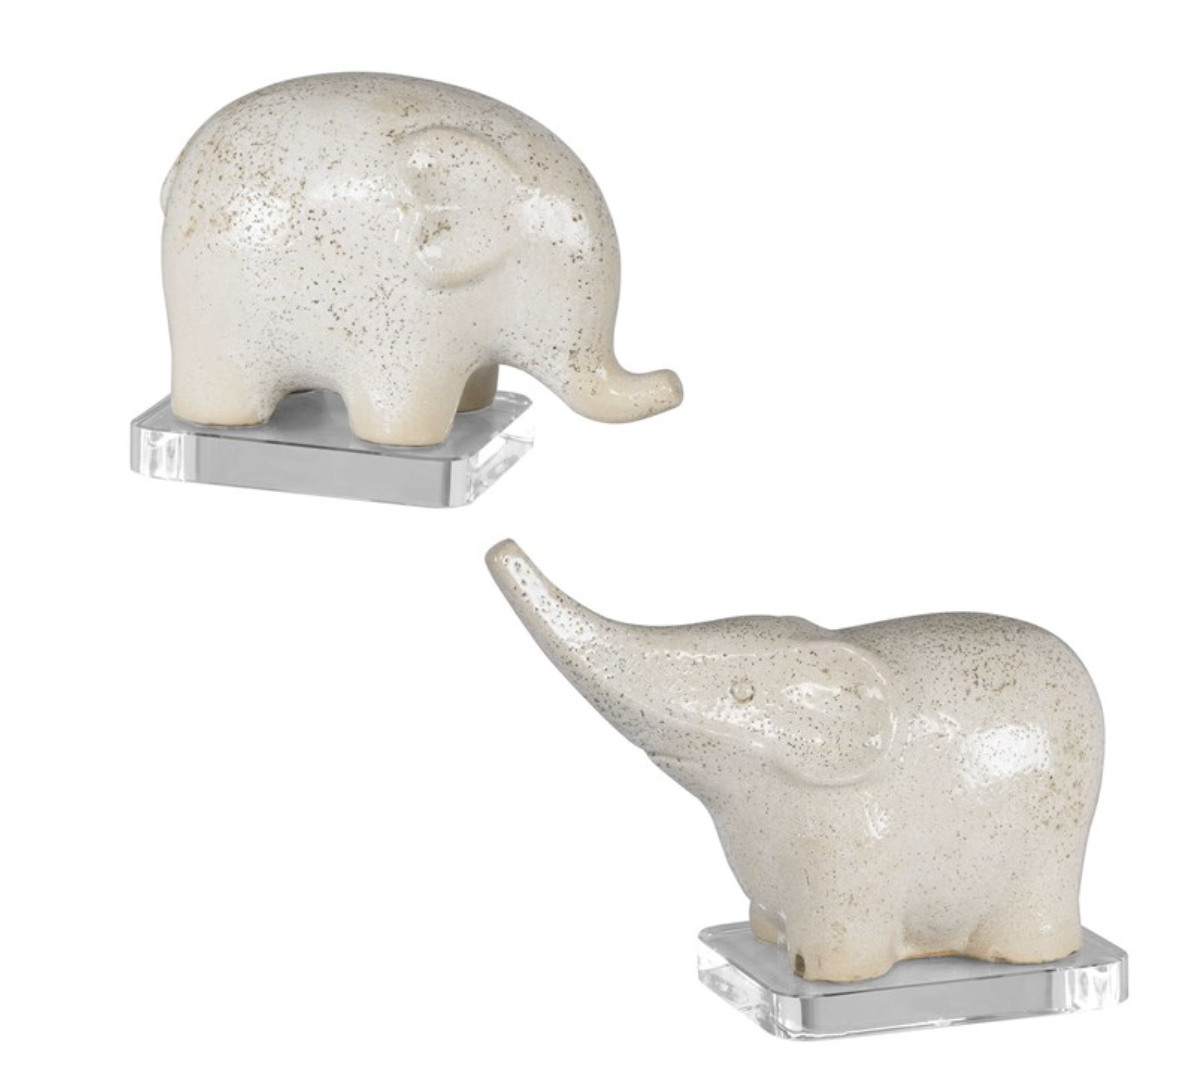 Kyan Elephant Sculptures